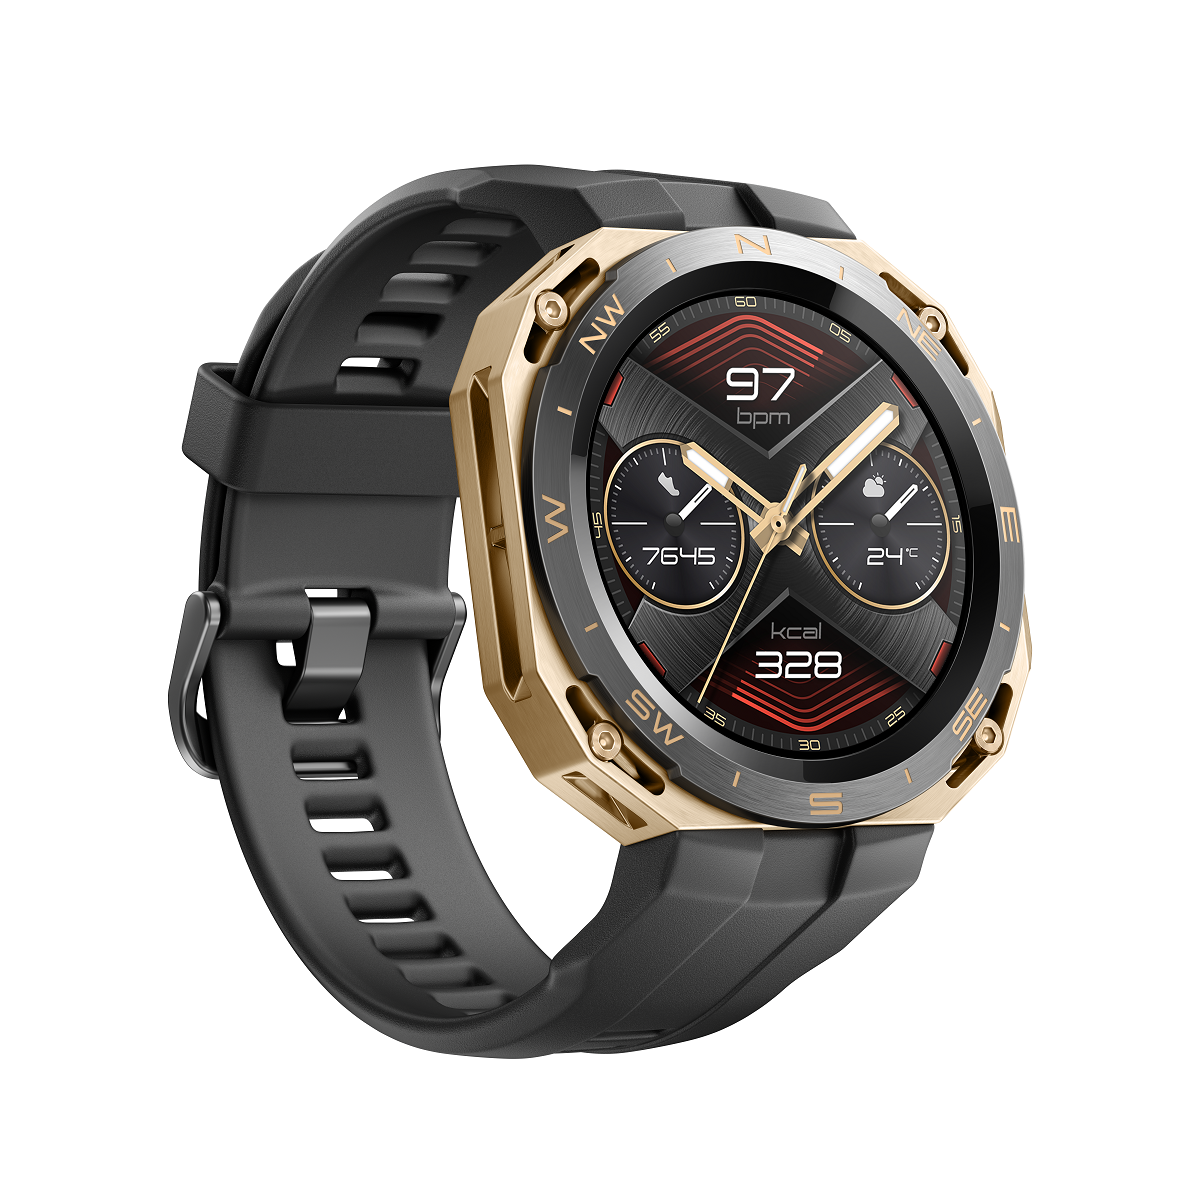 HUAWEI WATCH GT Cyber, thêm một đồng hồ thông minh chất từ Huawei - Arnold ProductImage Gold Front Right PNG RGB 20220830